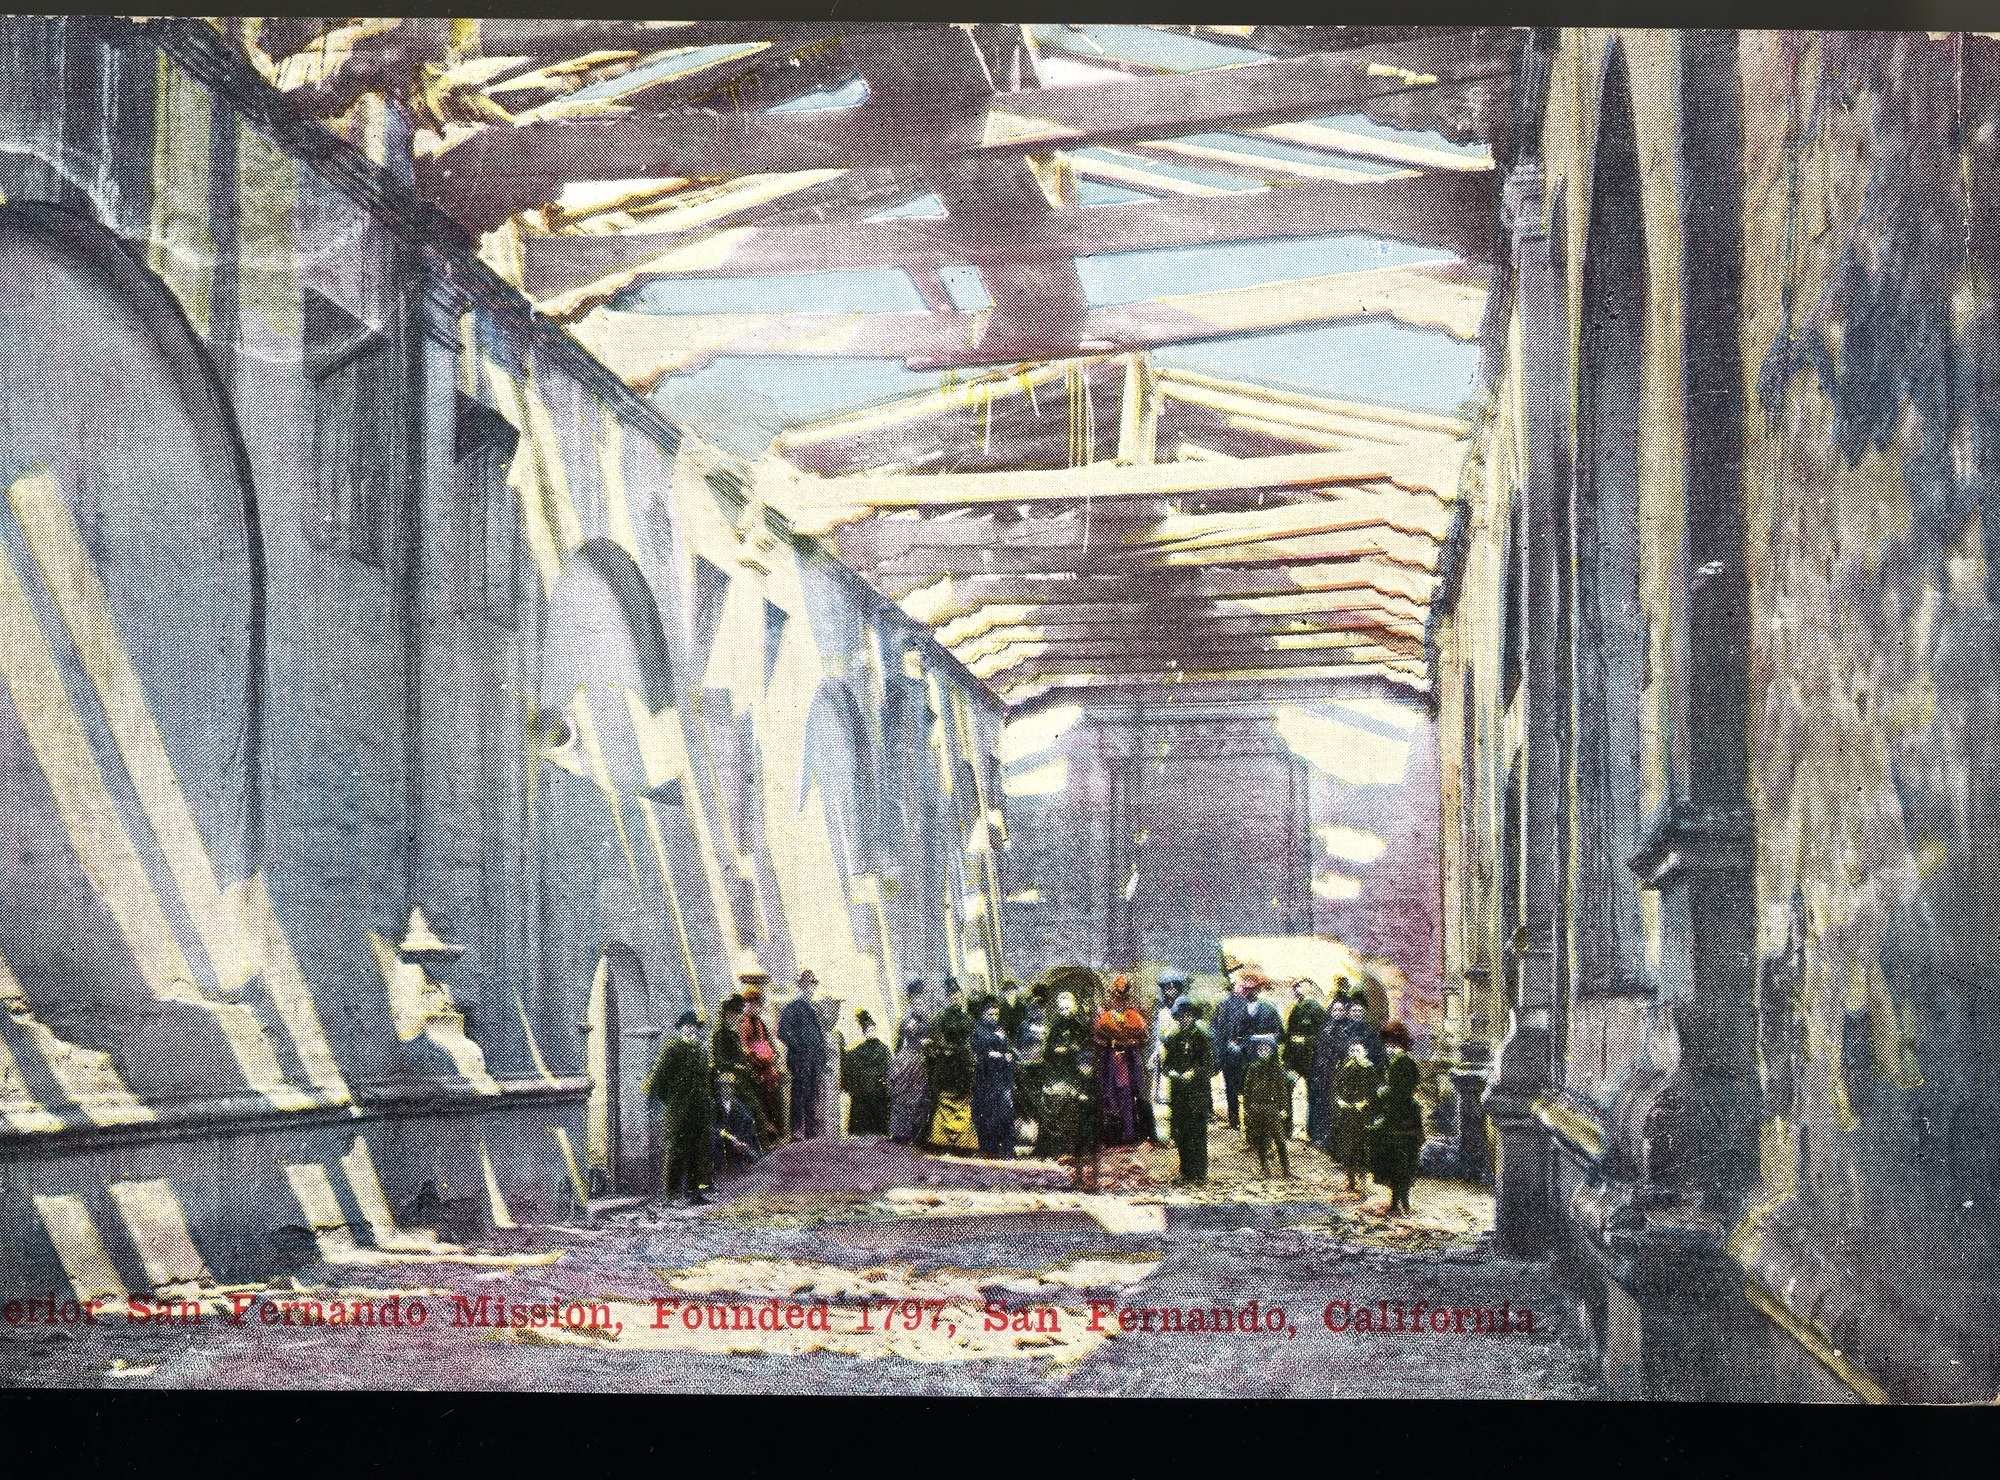 Postcard 55 – Interior San Fernando Mission, Founded 1797, San Fernando, California. Van Ornum Colorprint Company. 1908-1921. NMAH 1986.0639.491.